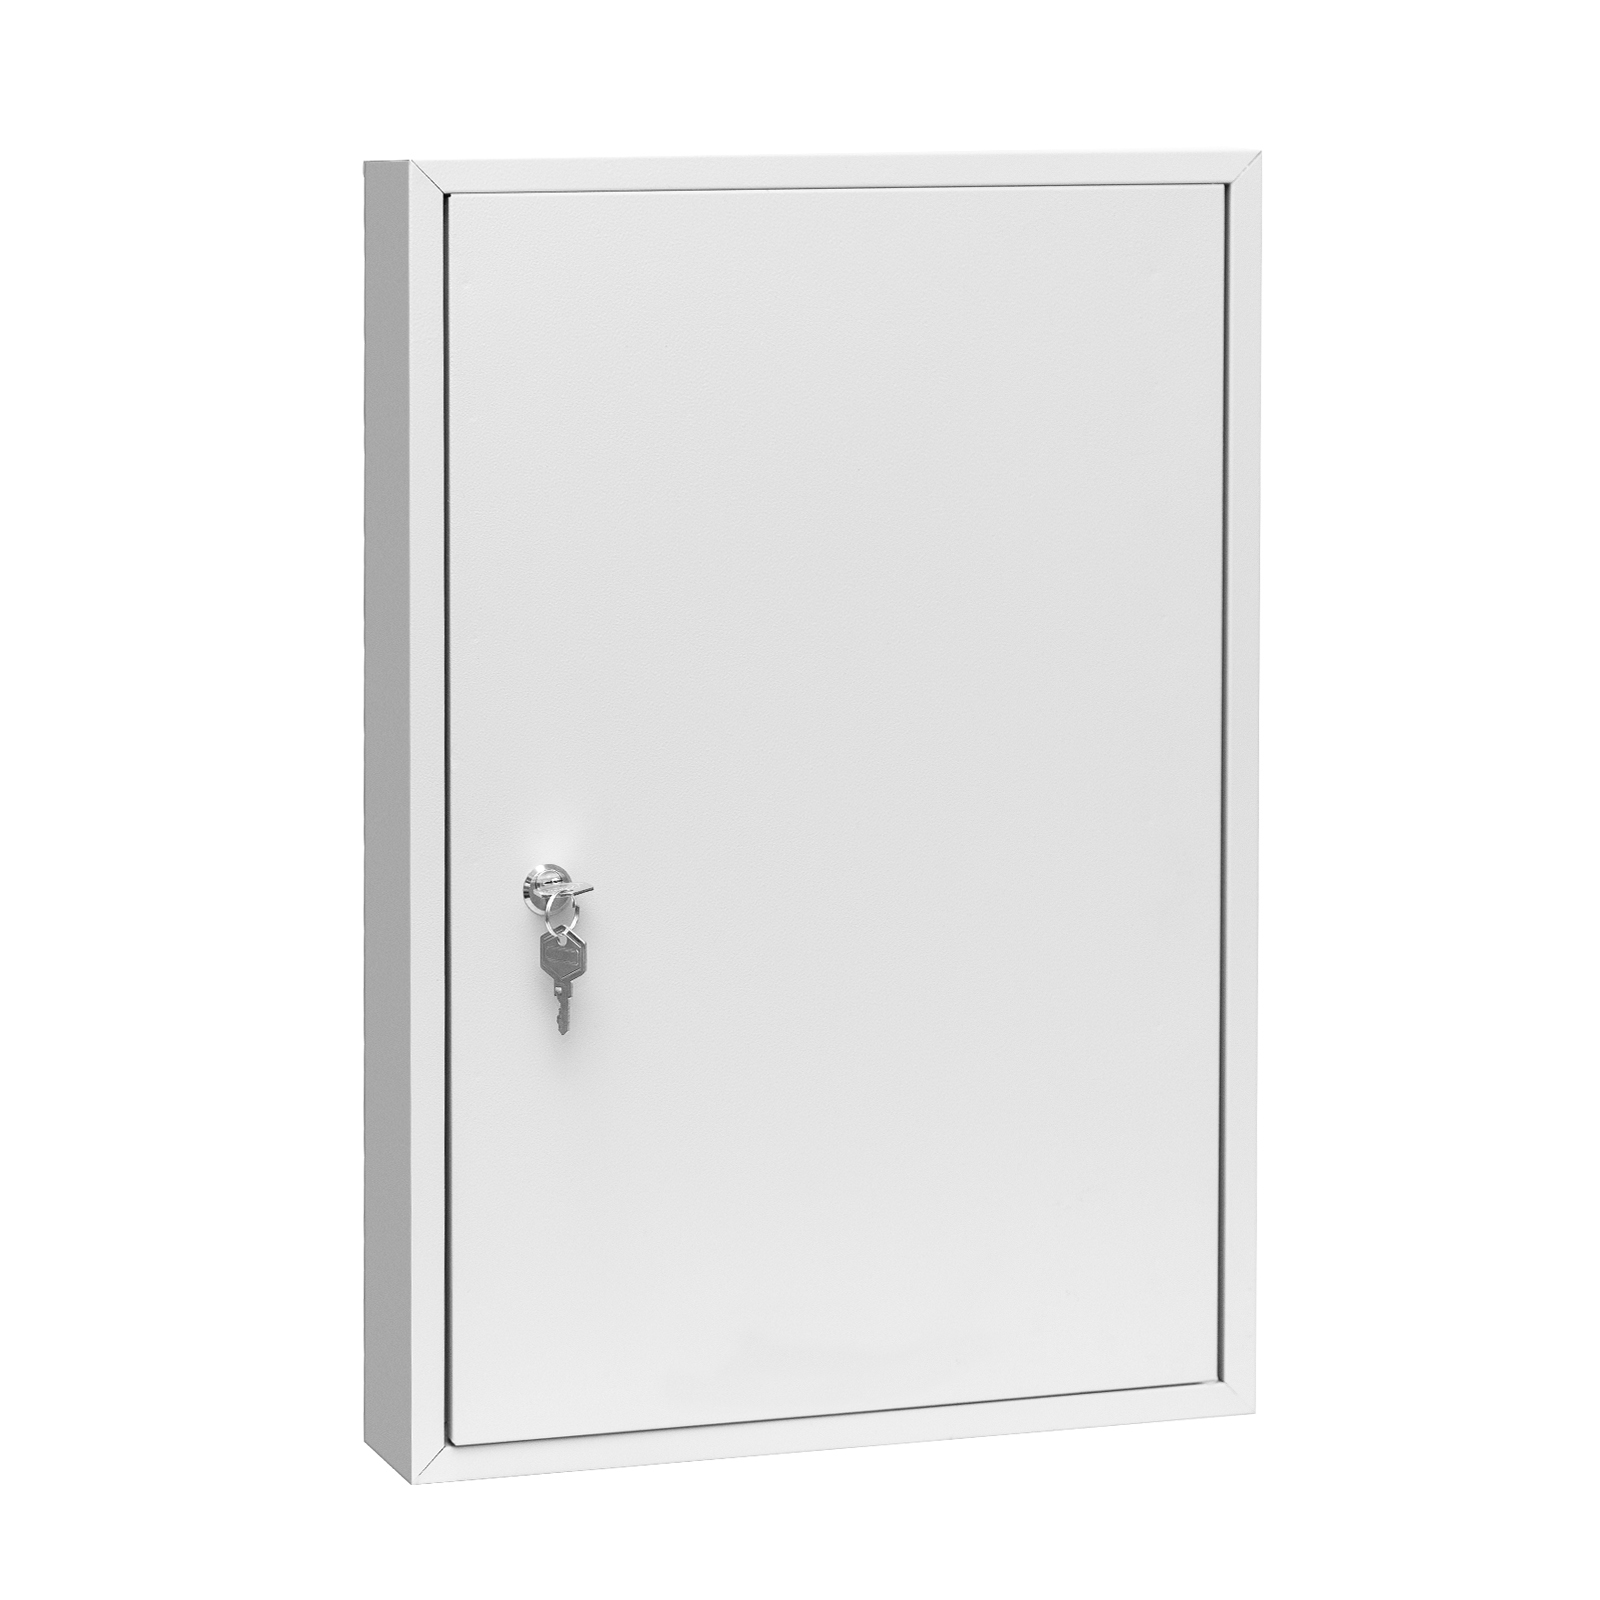 secure key box large metal key box with 200 hooks metal wall mounted key box Key cabinet with lock key cabinet